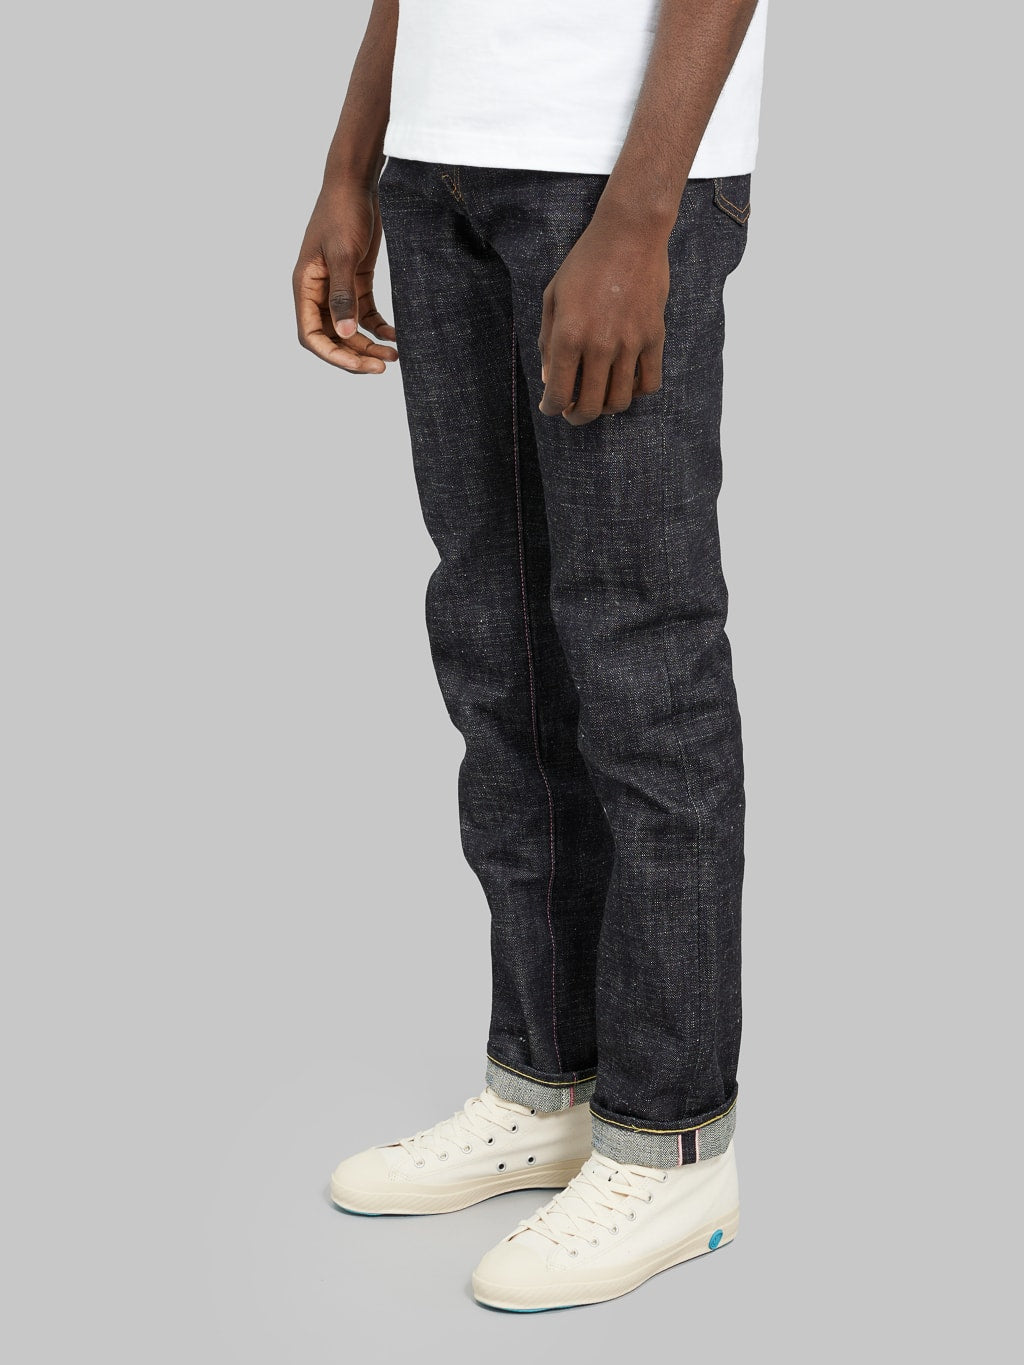 momotaro jeans 0605 82 16oz texture denim natural tapered side fit